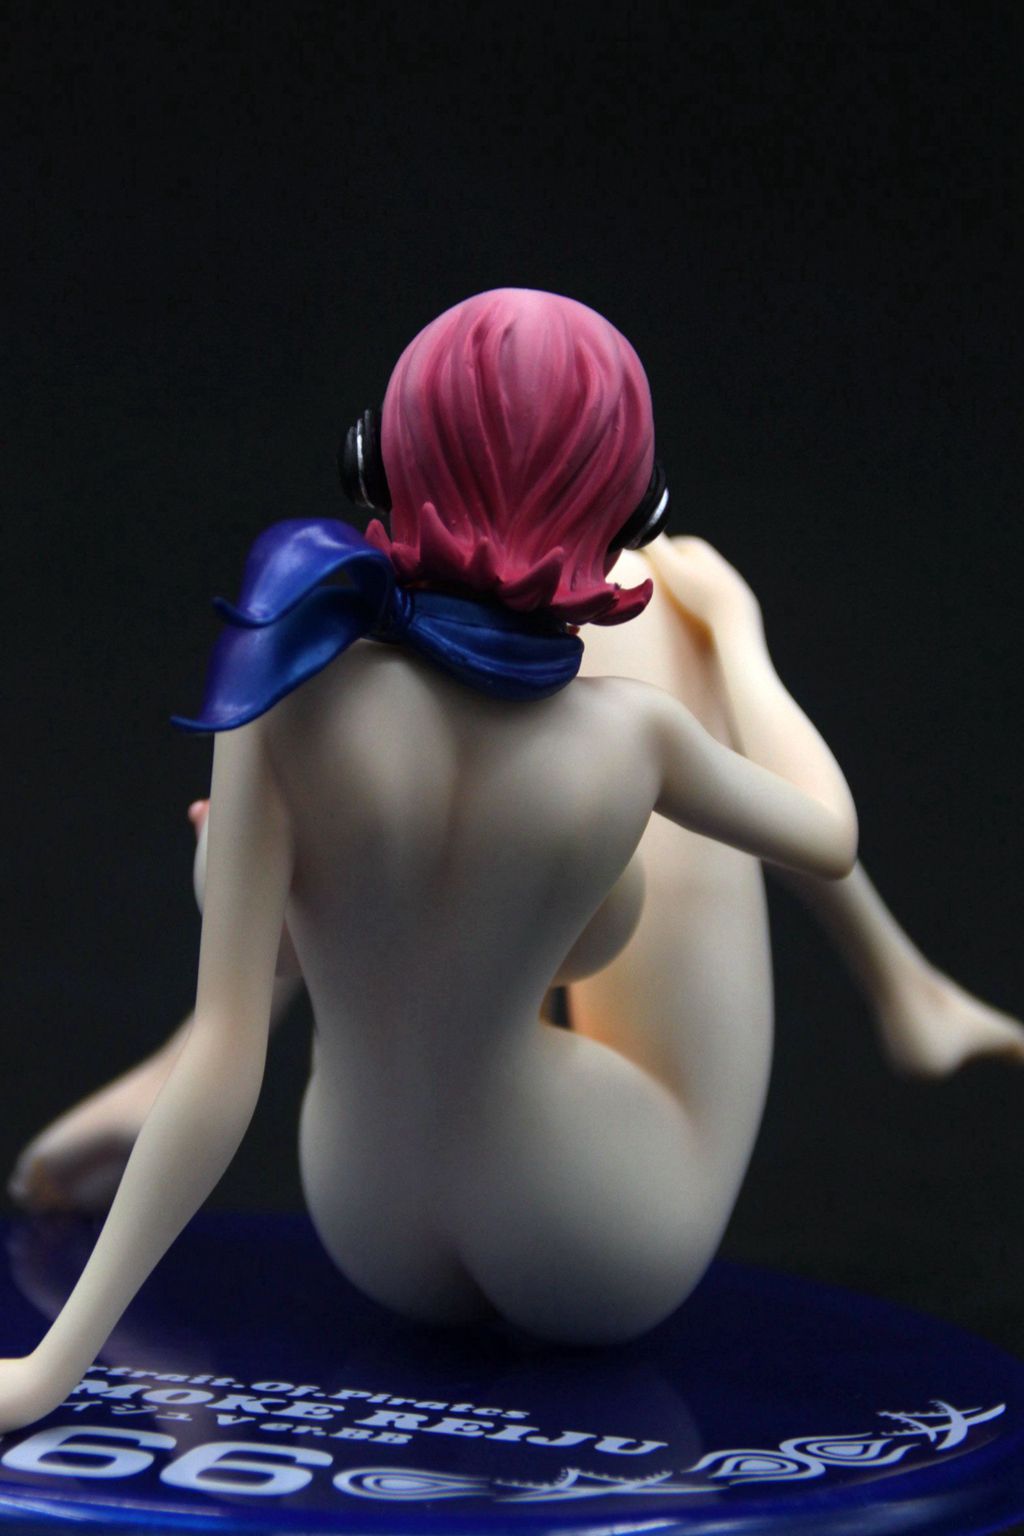 One Piece - Vinsmoke Reiju 1/6 naked anime figure